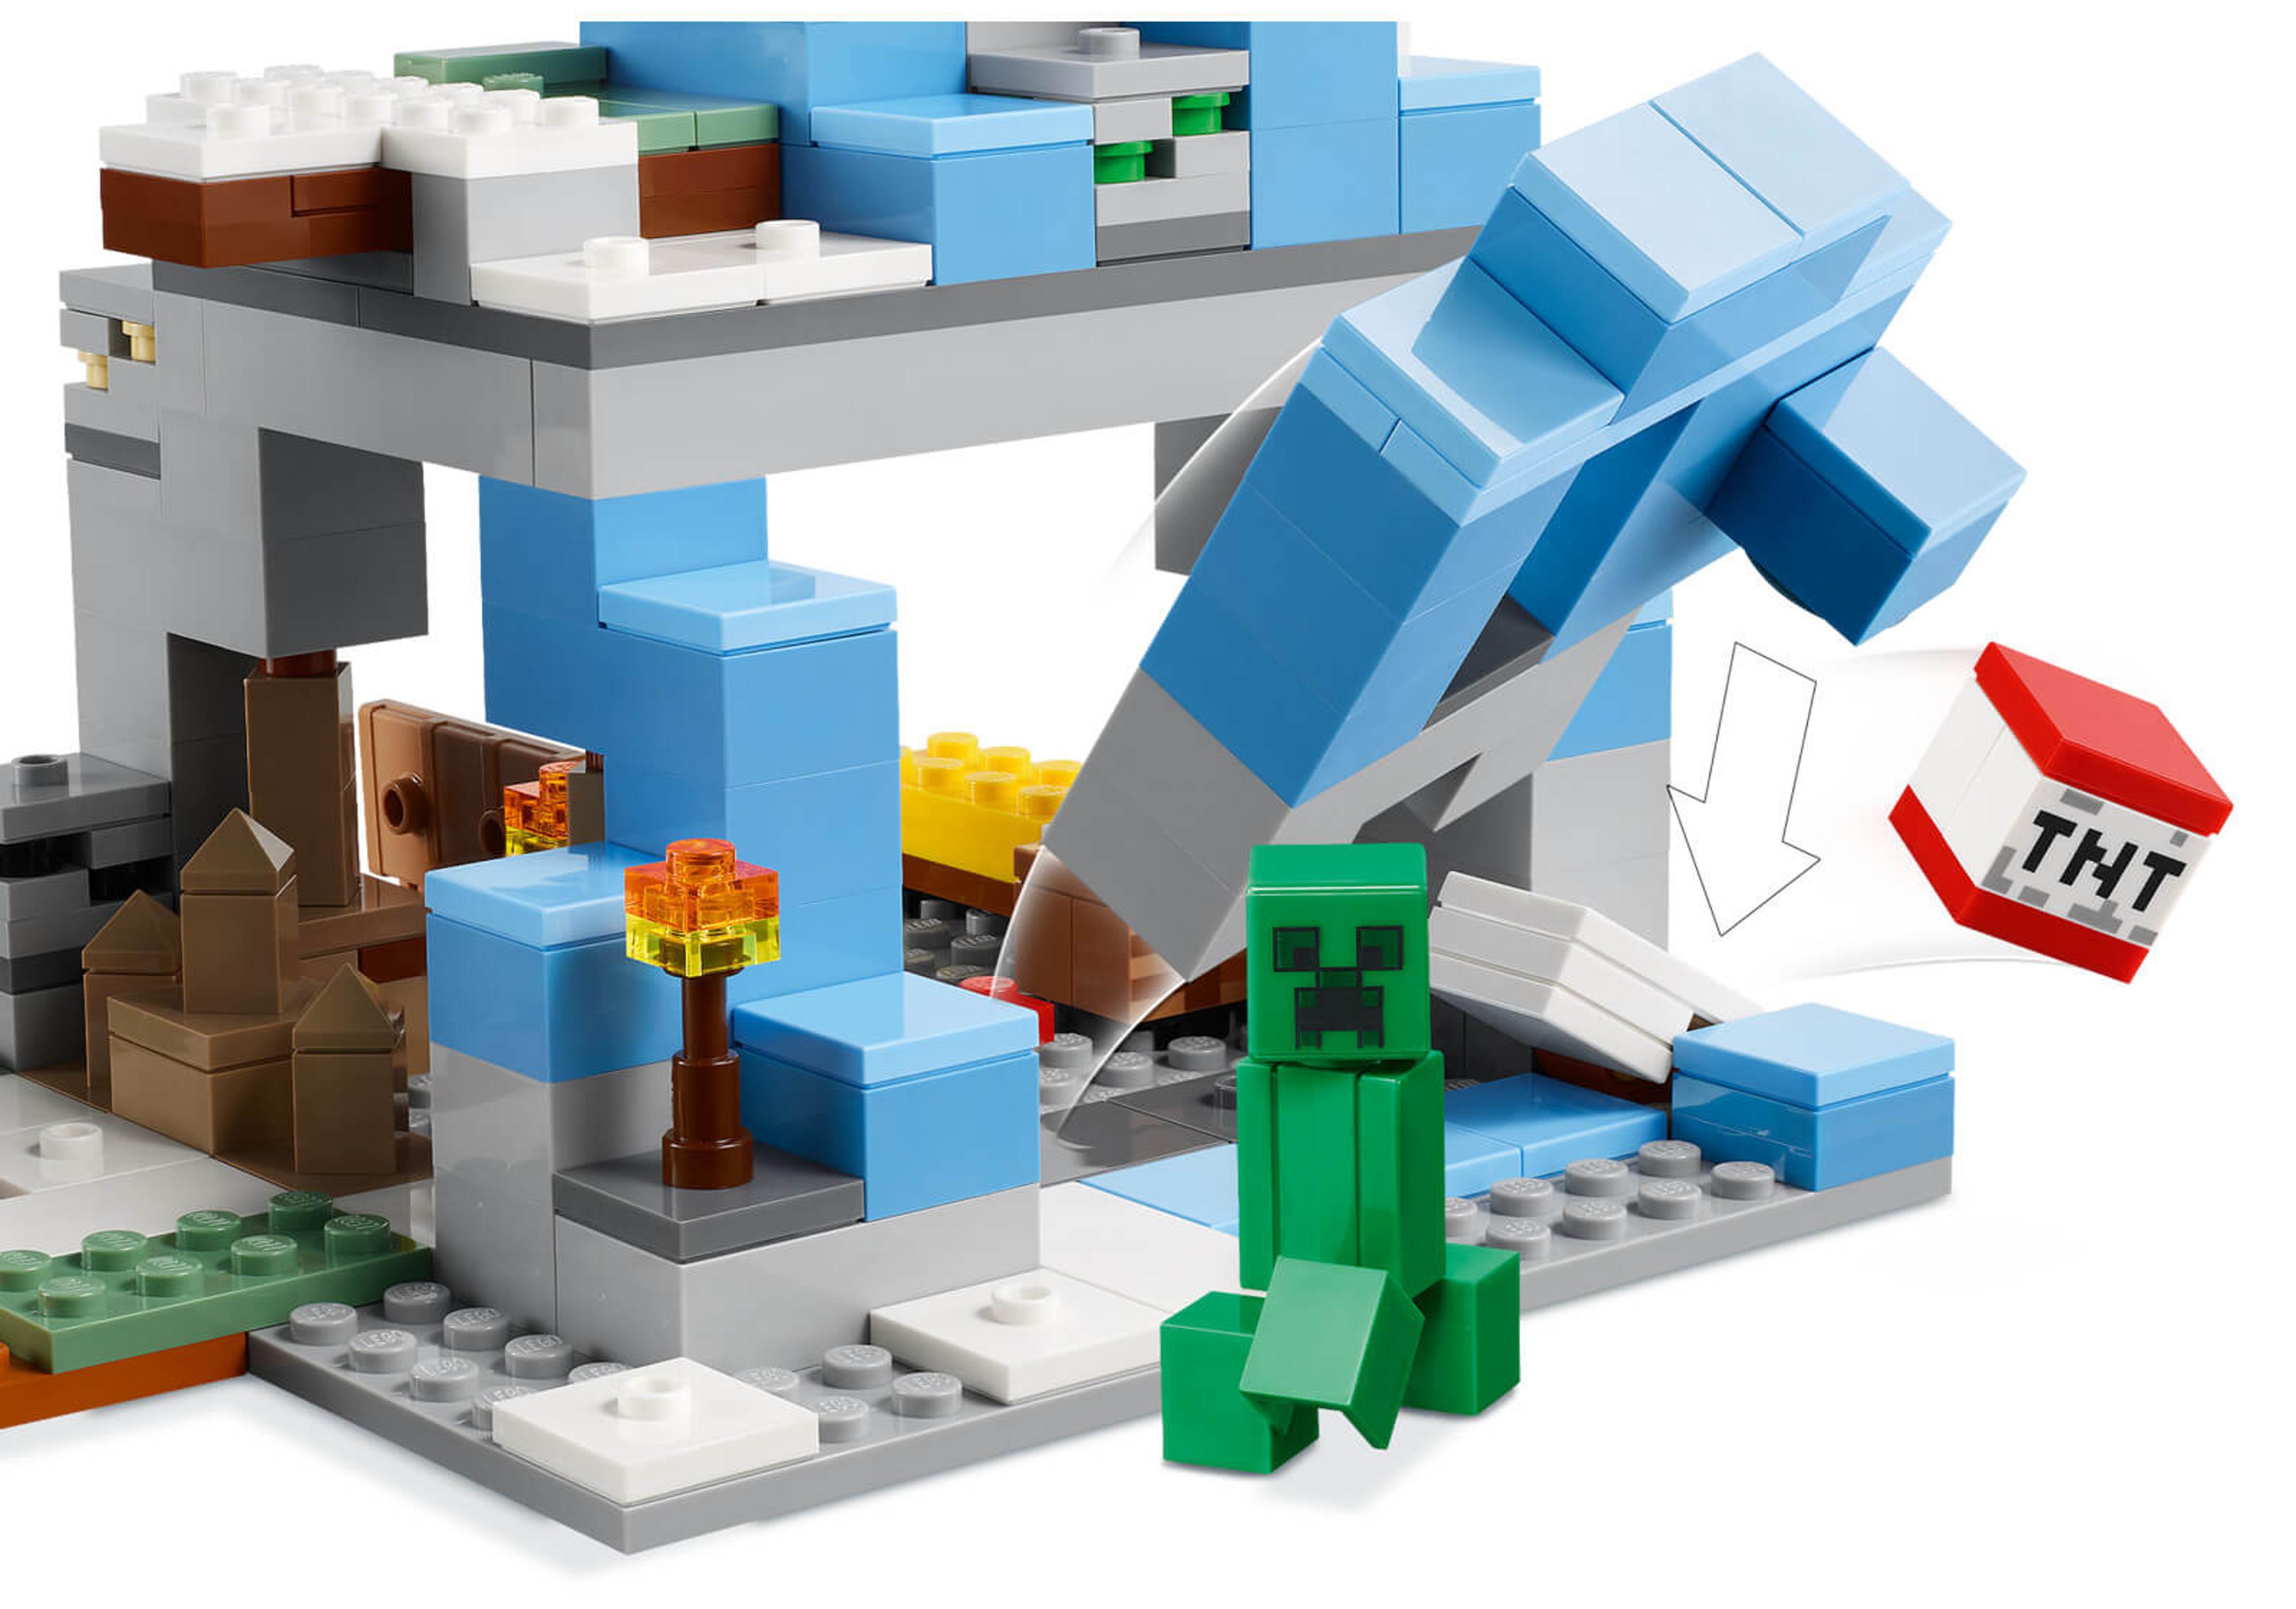 LEGO Minecraft - The Frozen Peaks